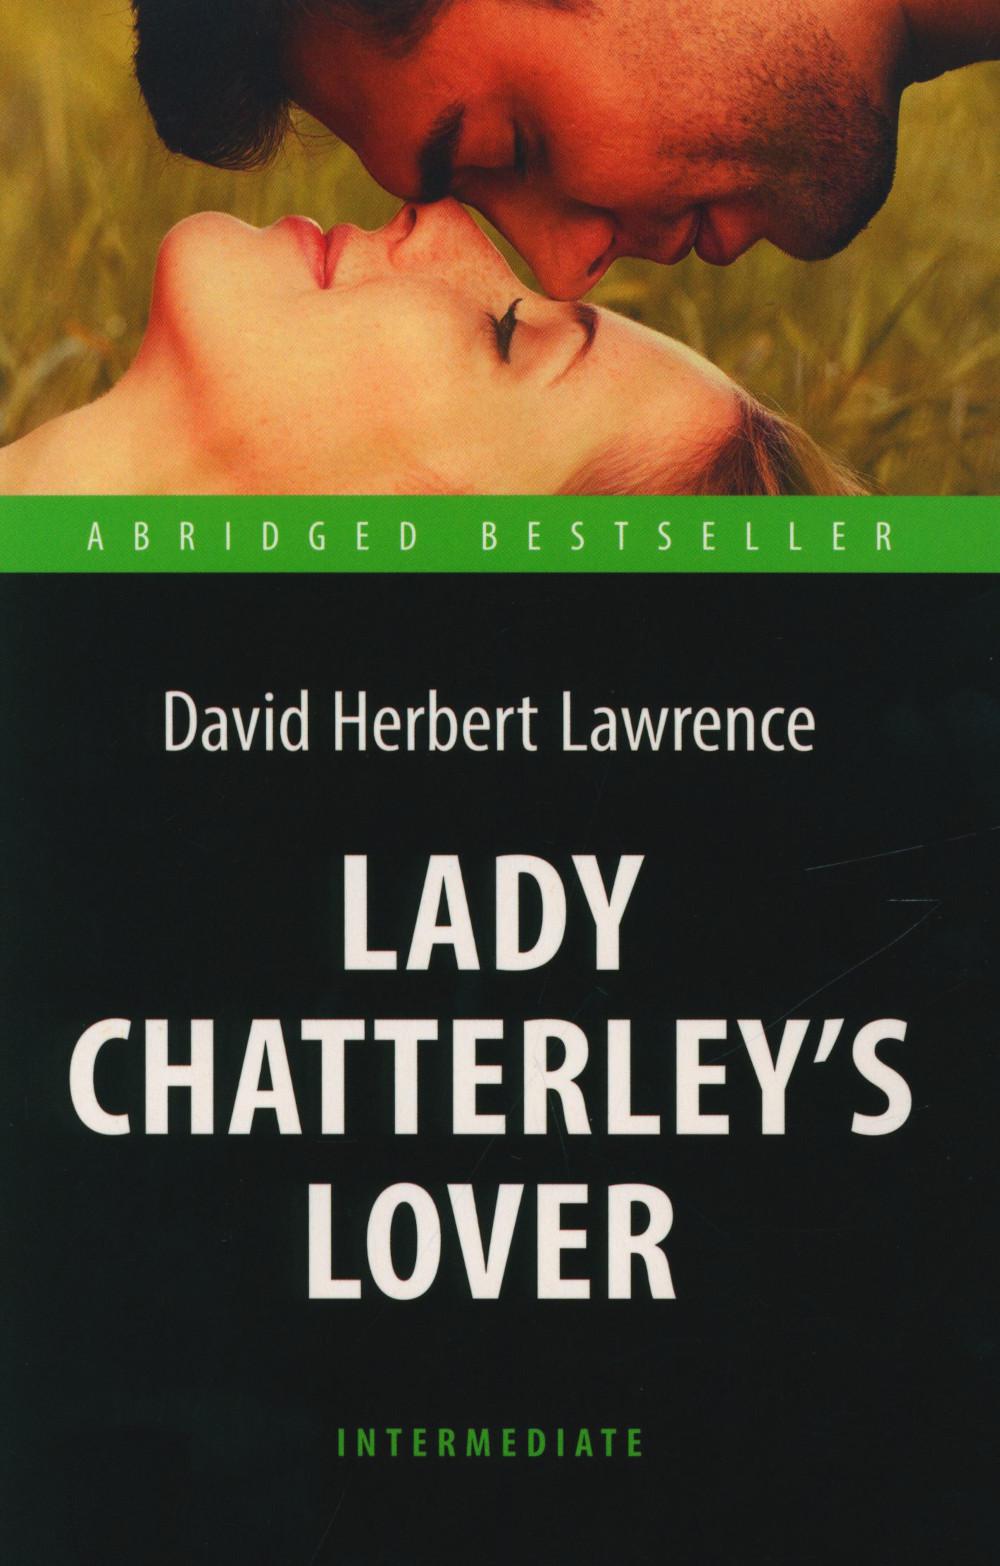  ..    (Lady Chatterleys Lover).      . Intermediate.  Abridged Bestseller